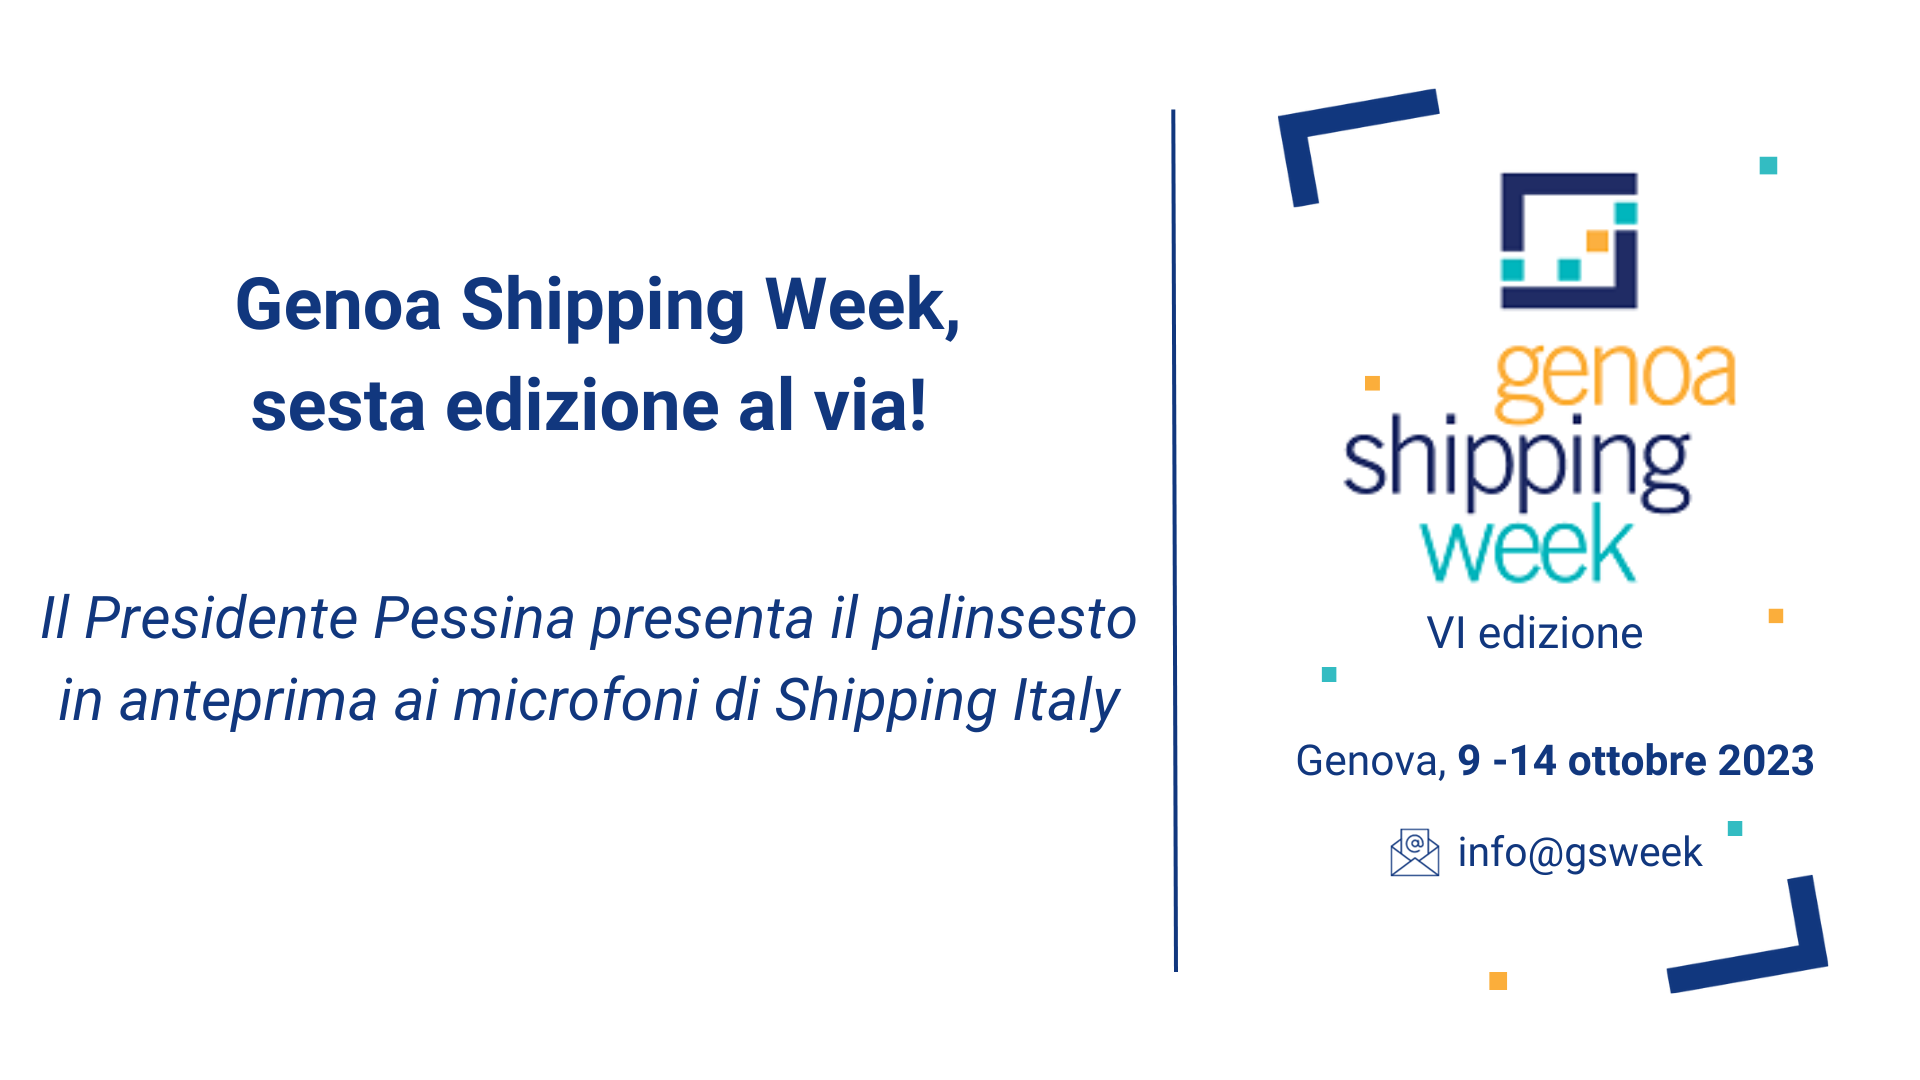 Il Presidente Pessina a Shipping Italy: 